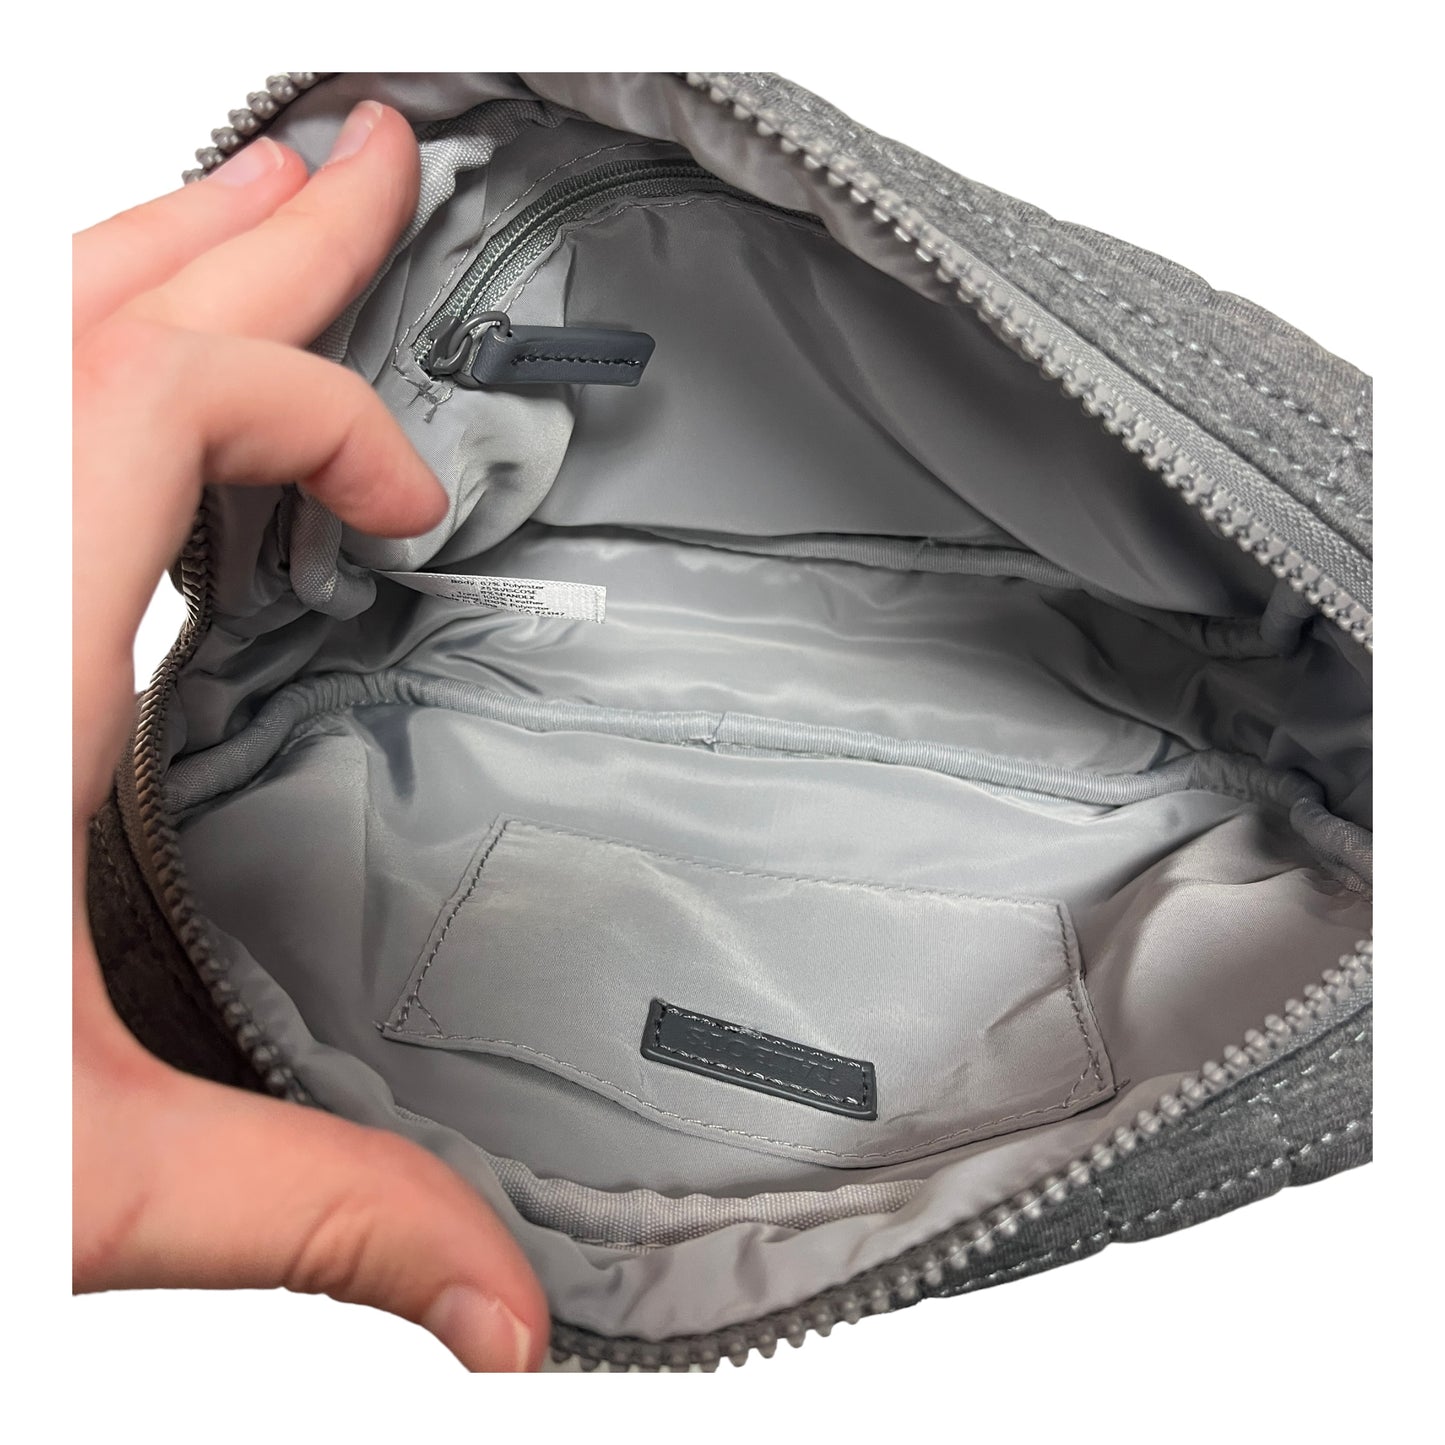 Belt Bag By Talbots  Size: Medium